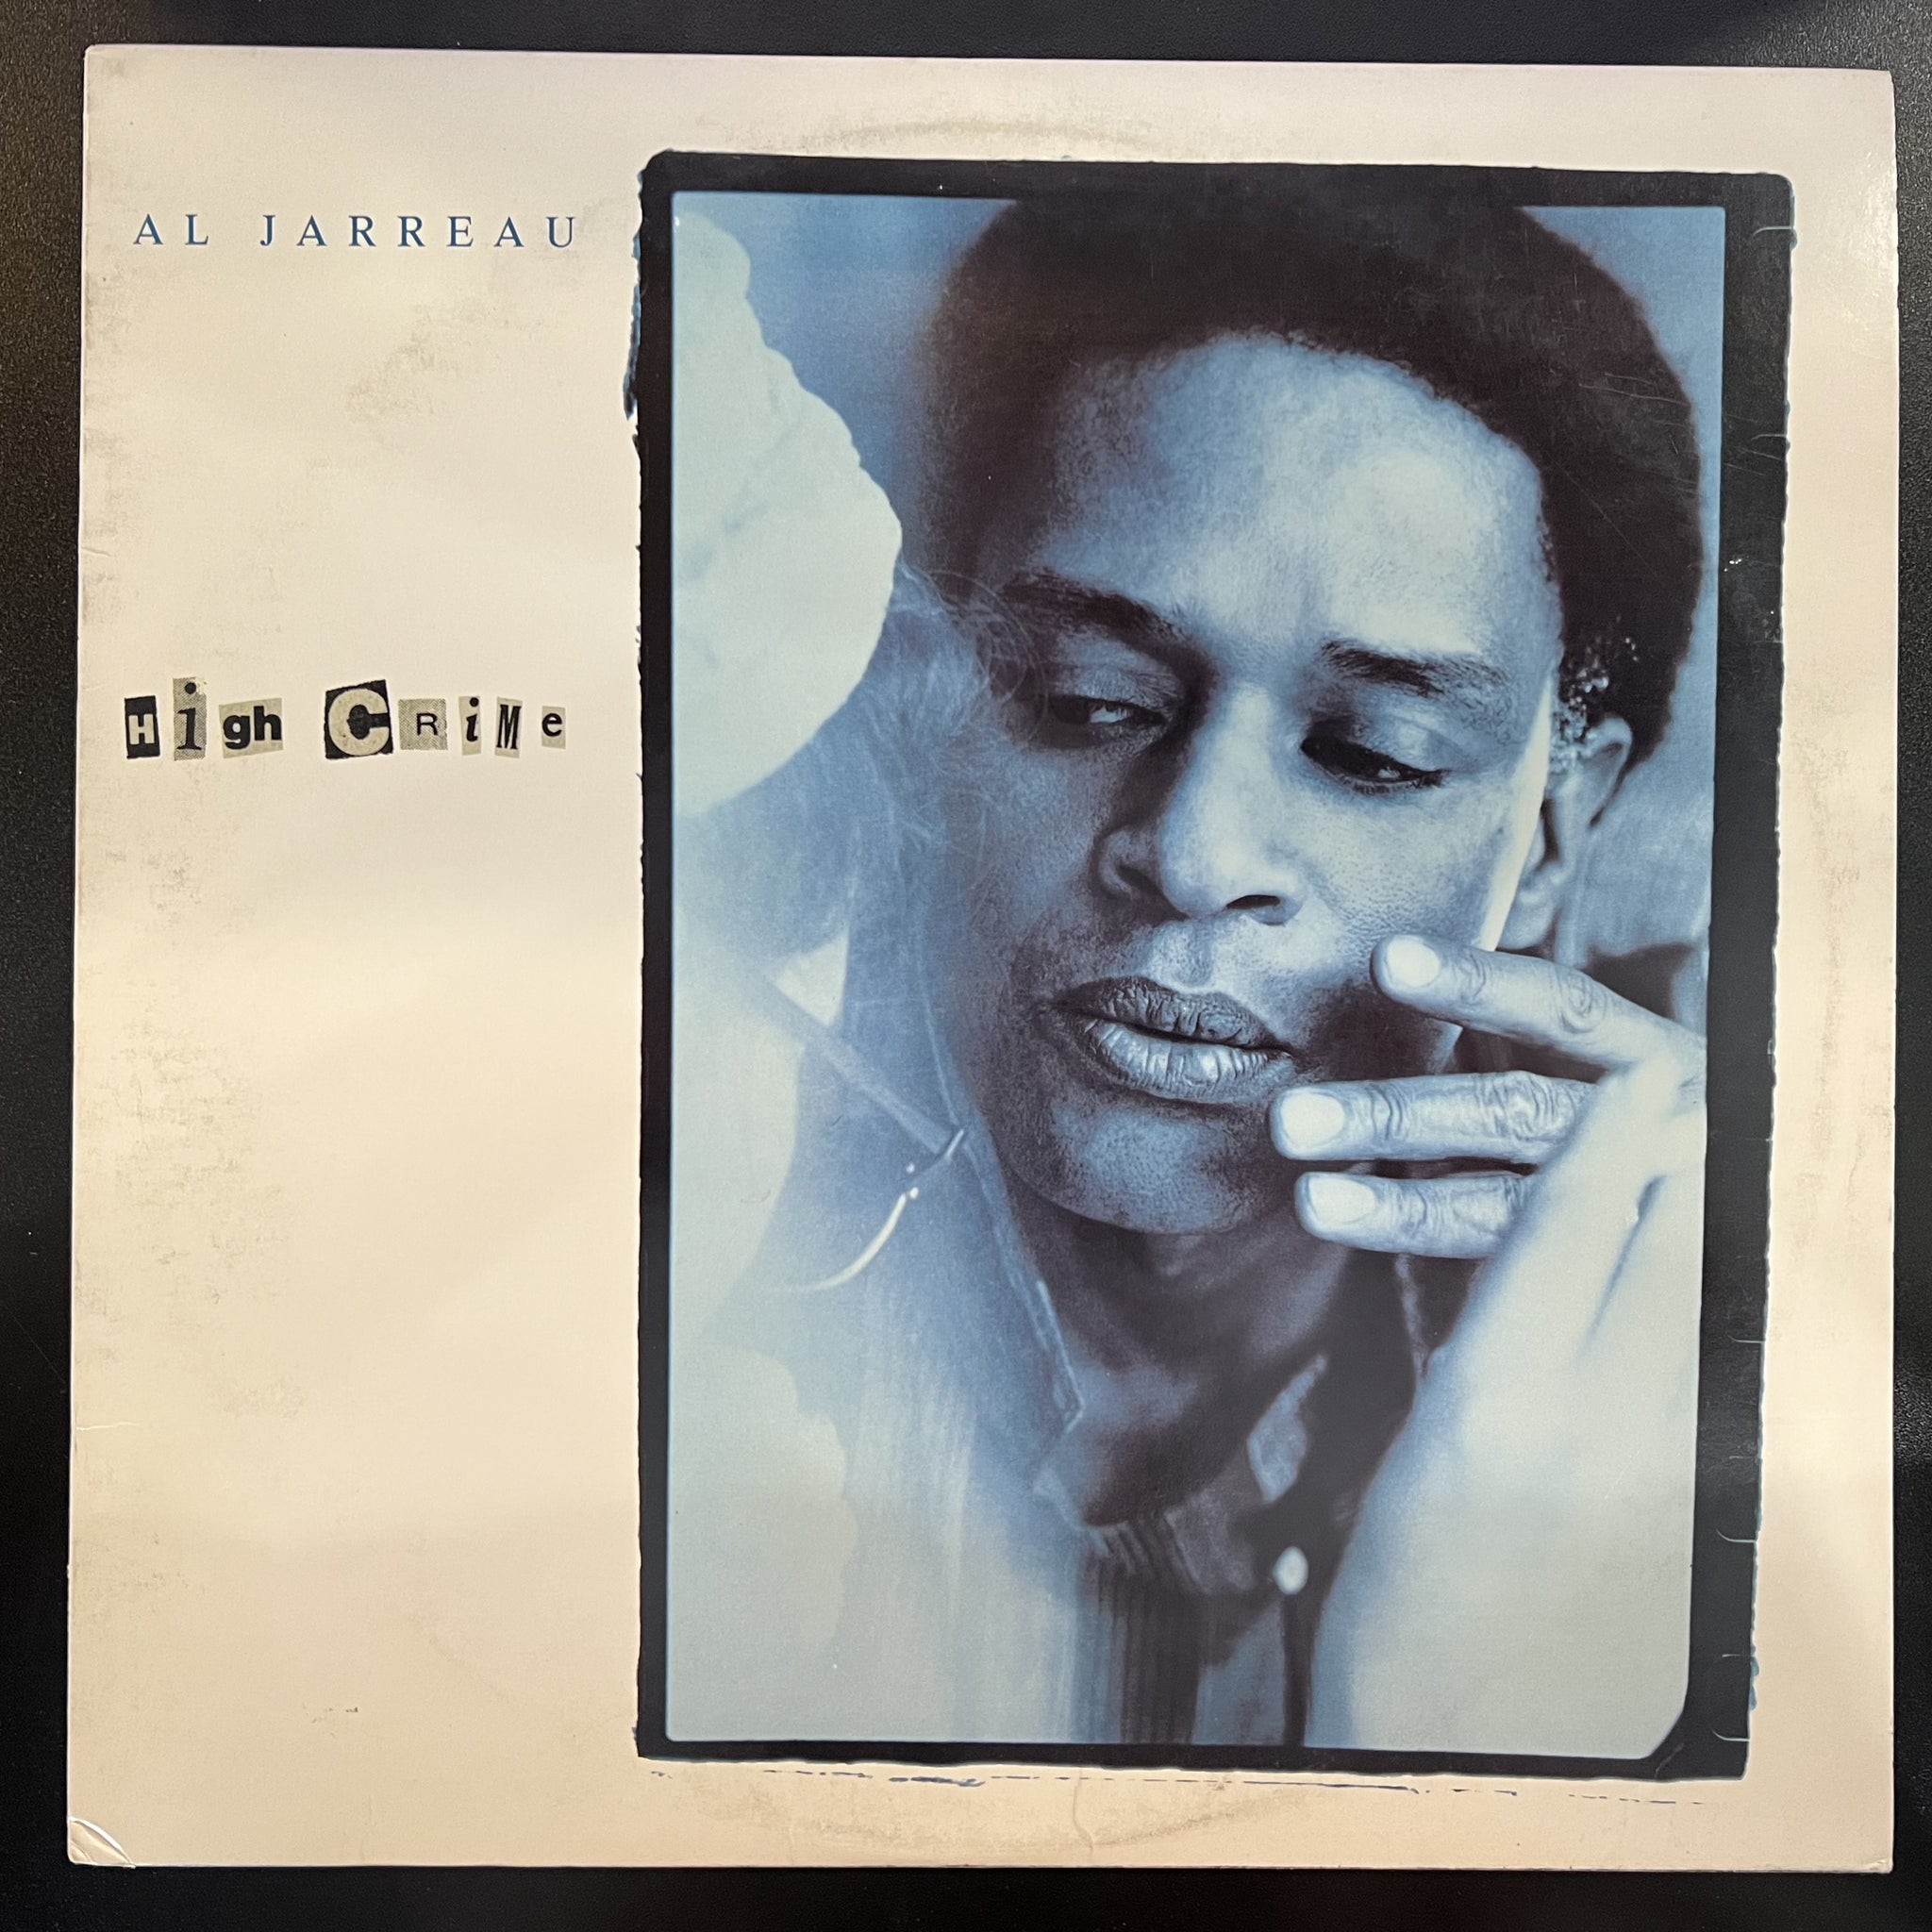 Al Jarreau – High Crime - VG+ LP Record 1984 Warner USA Vinyl - Soul-Jazz / Downtempo